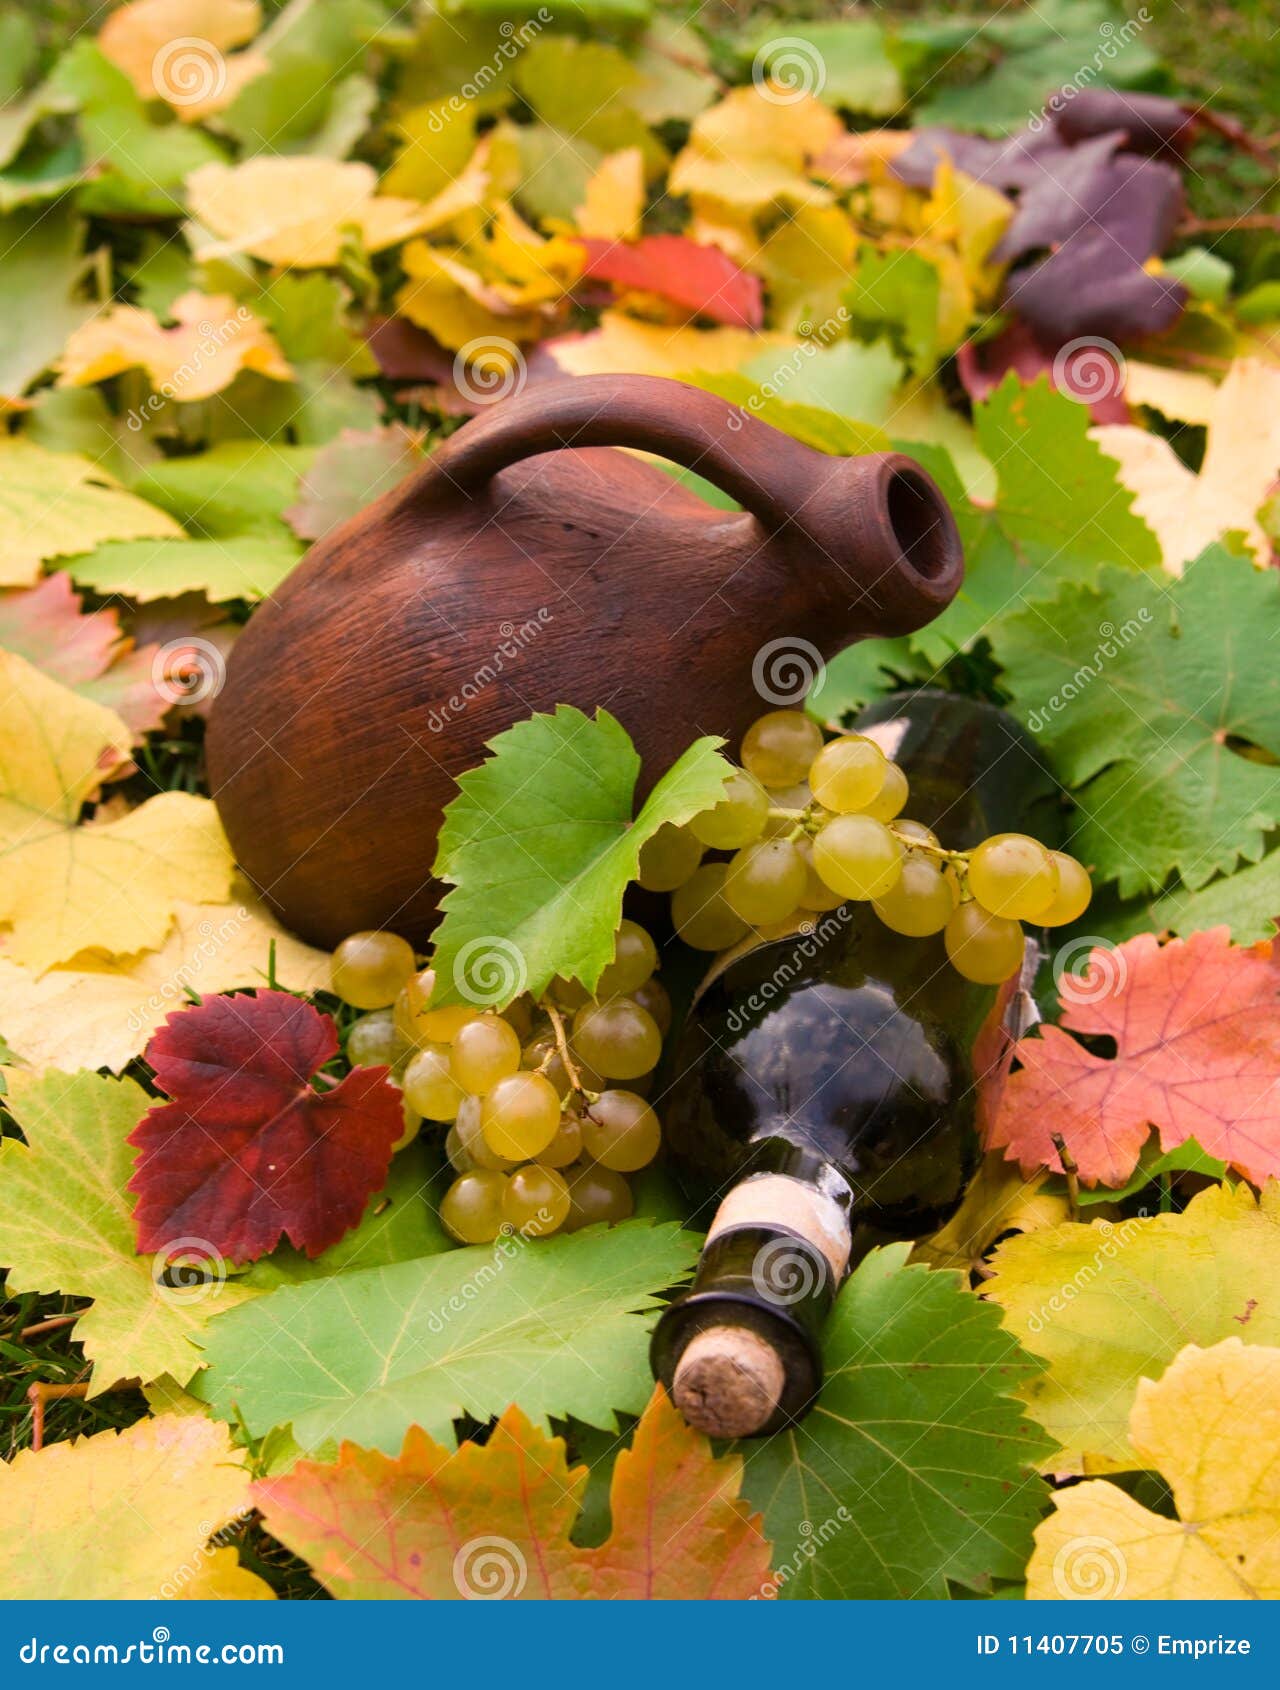 wine bottle, crock and grape